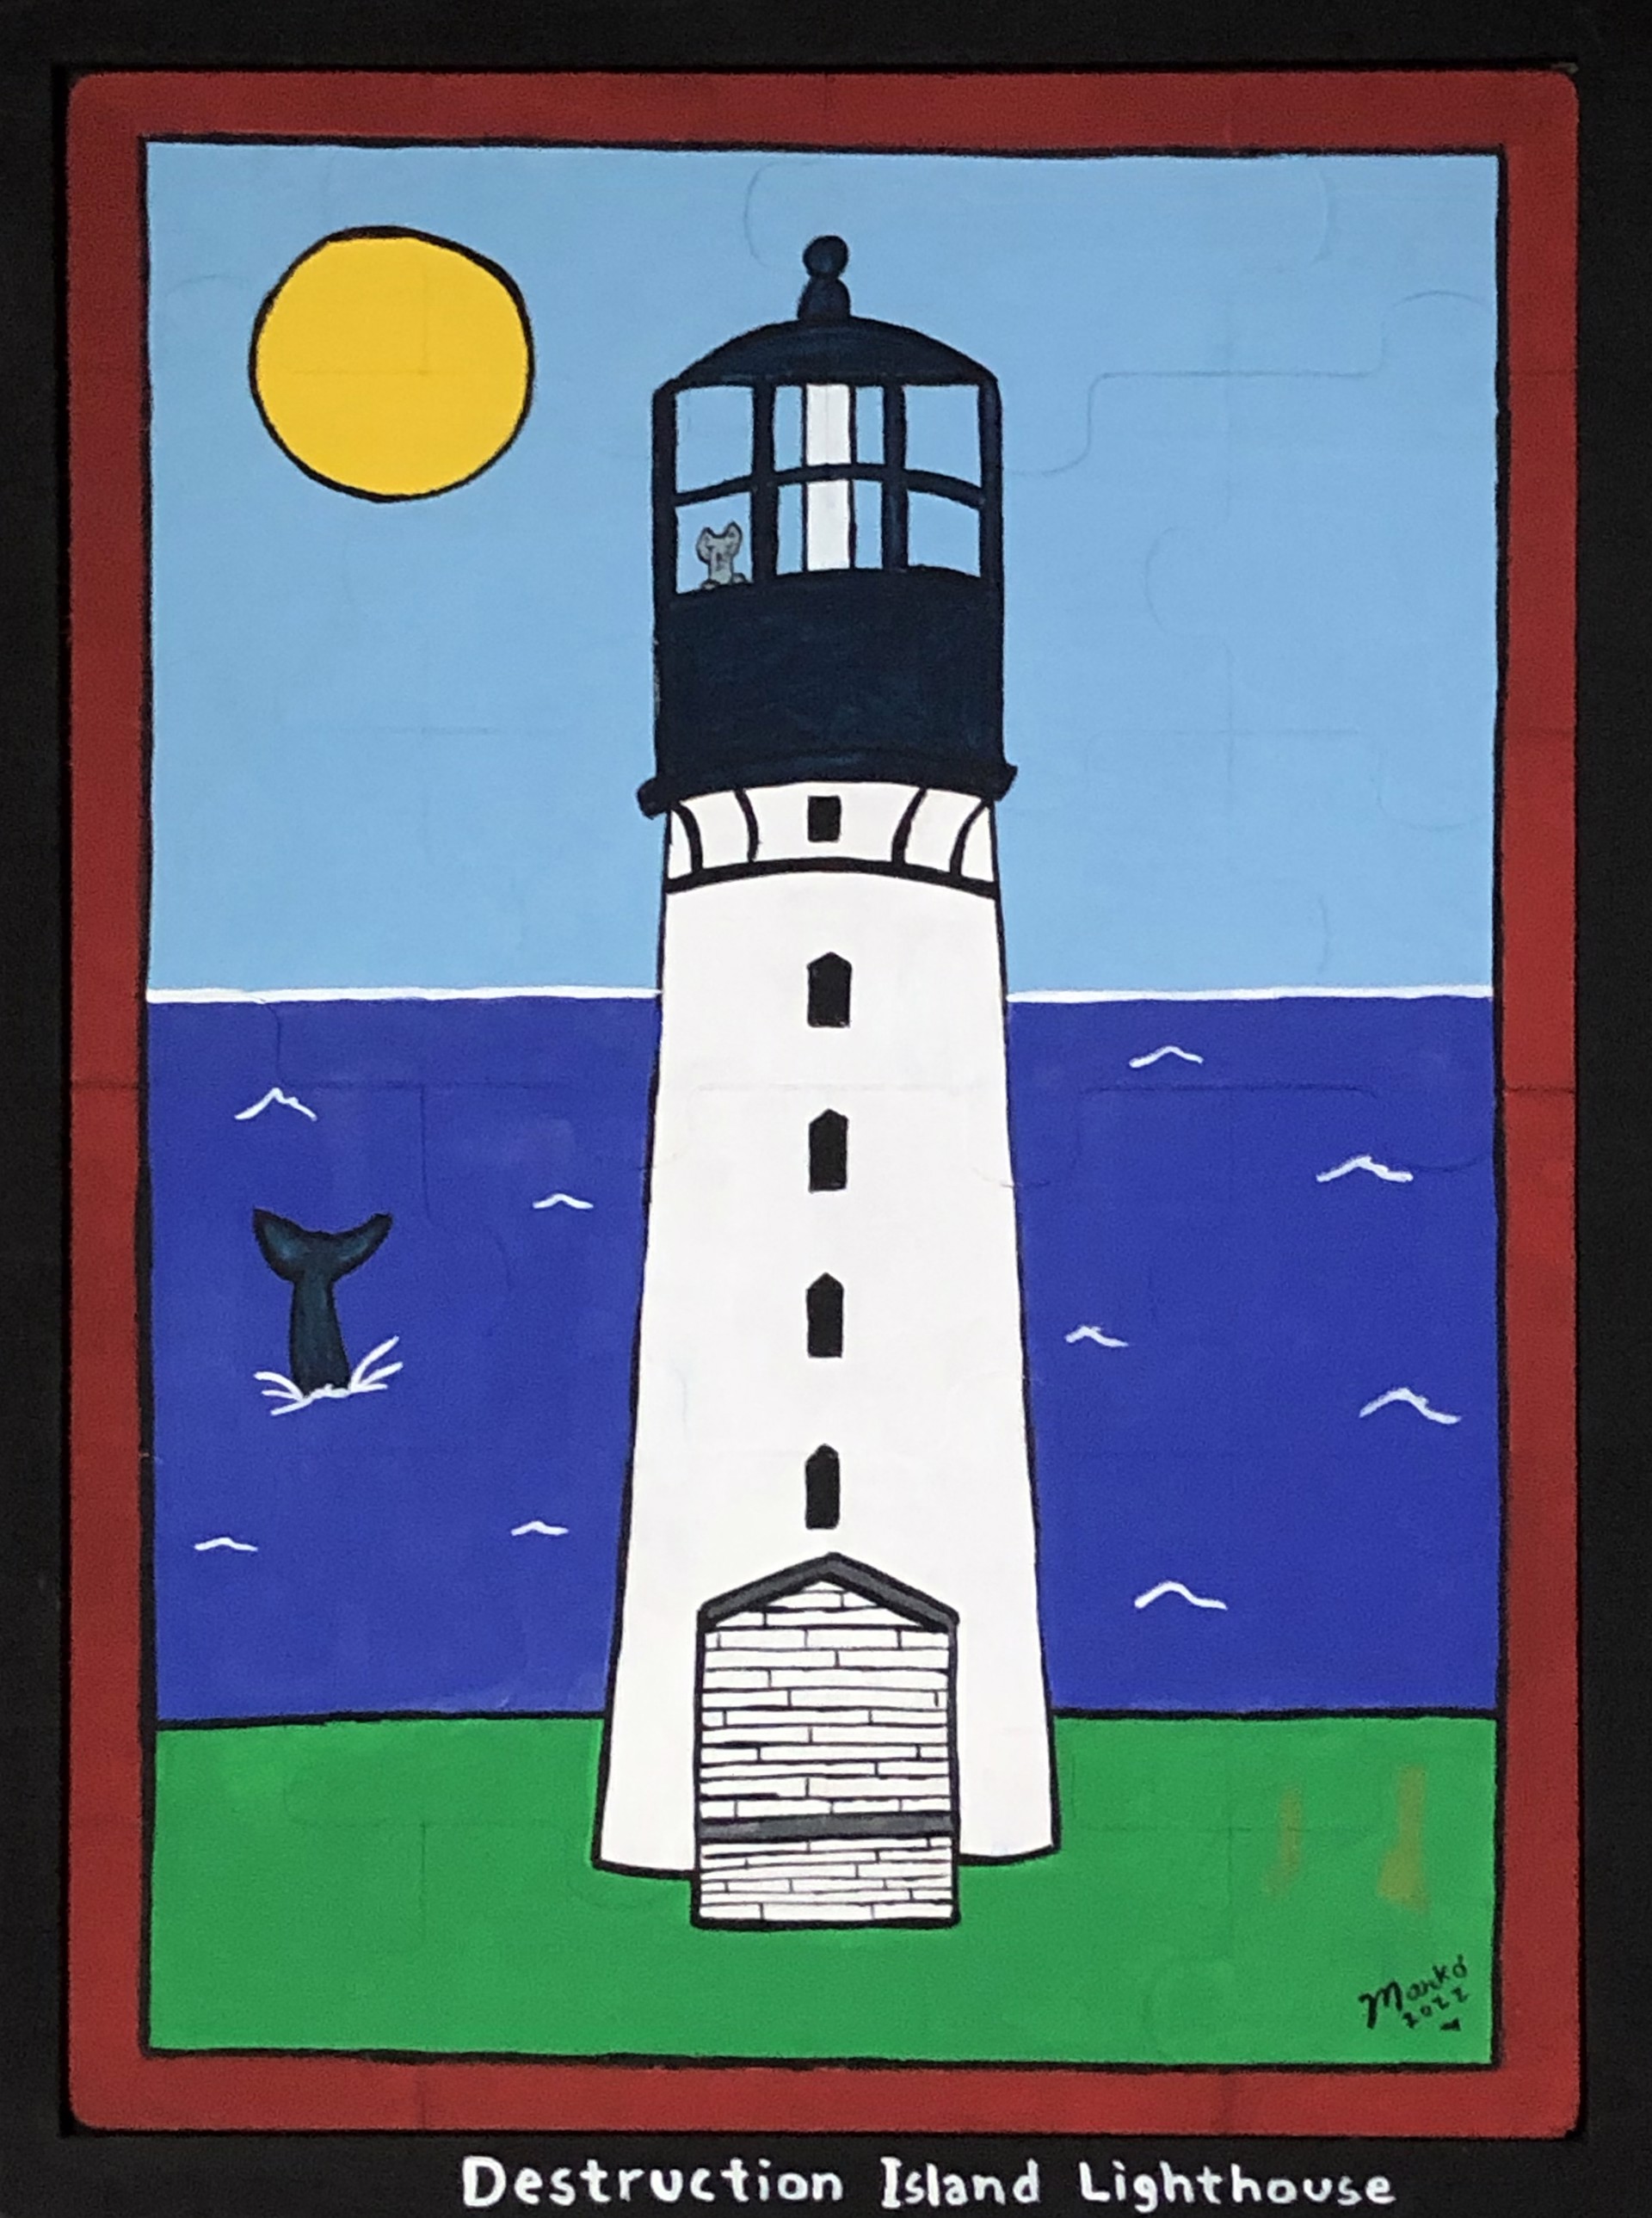 Destruction Island Lighthouse by Mark O'Malley